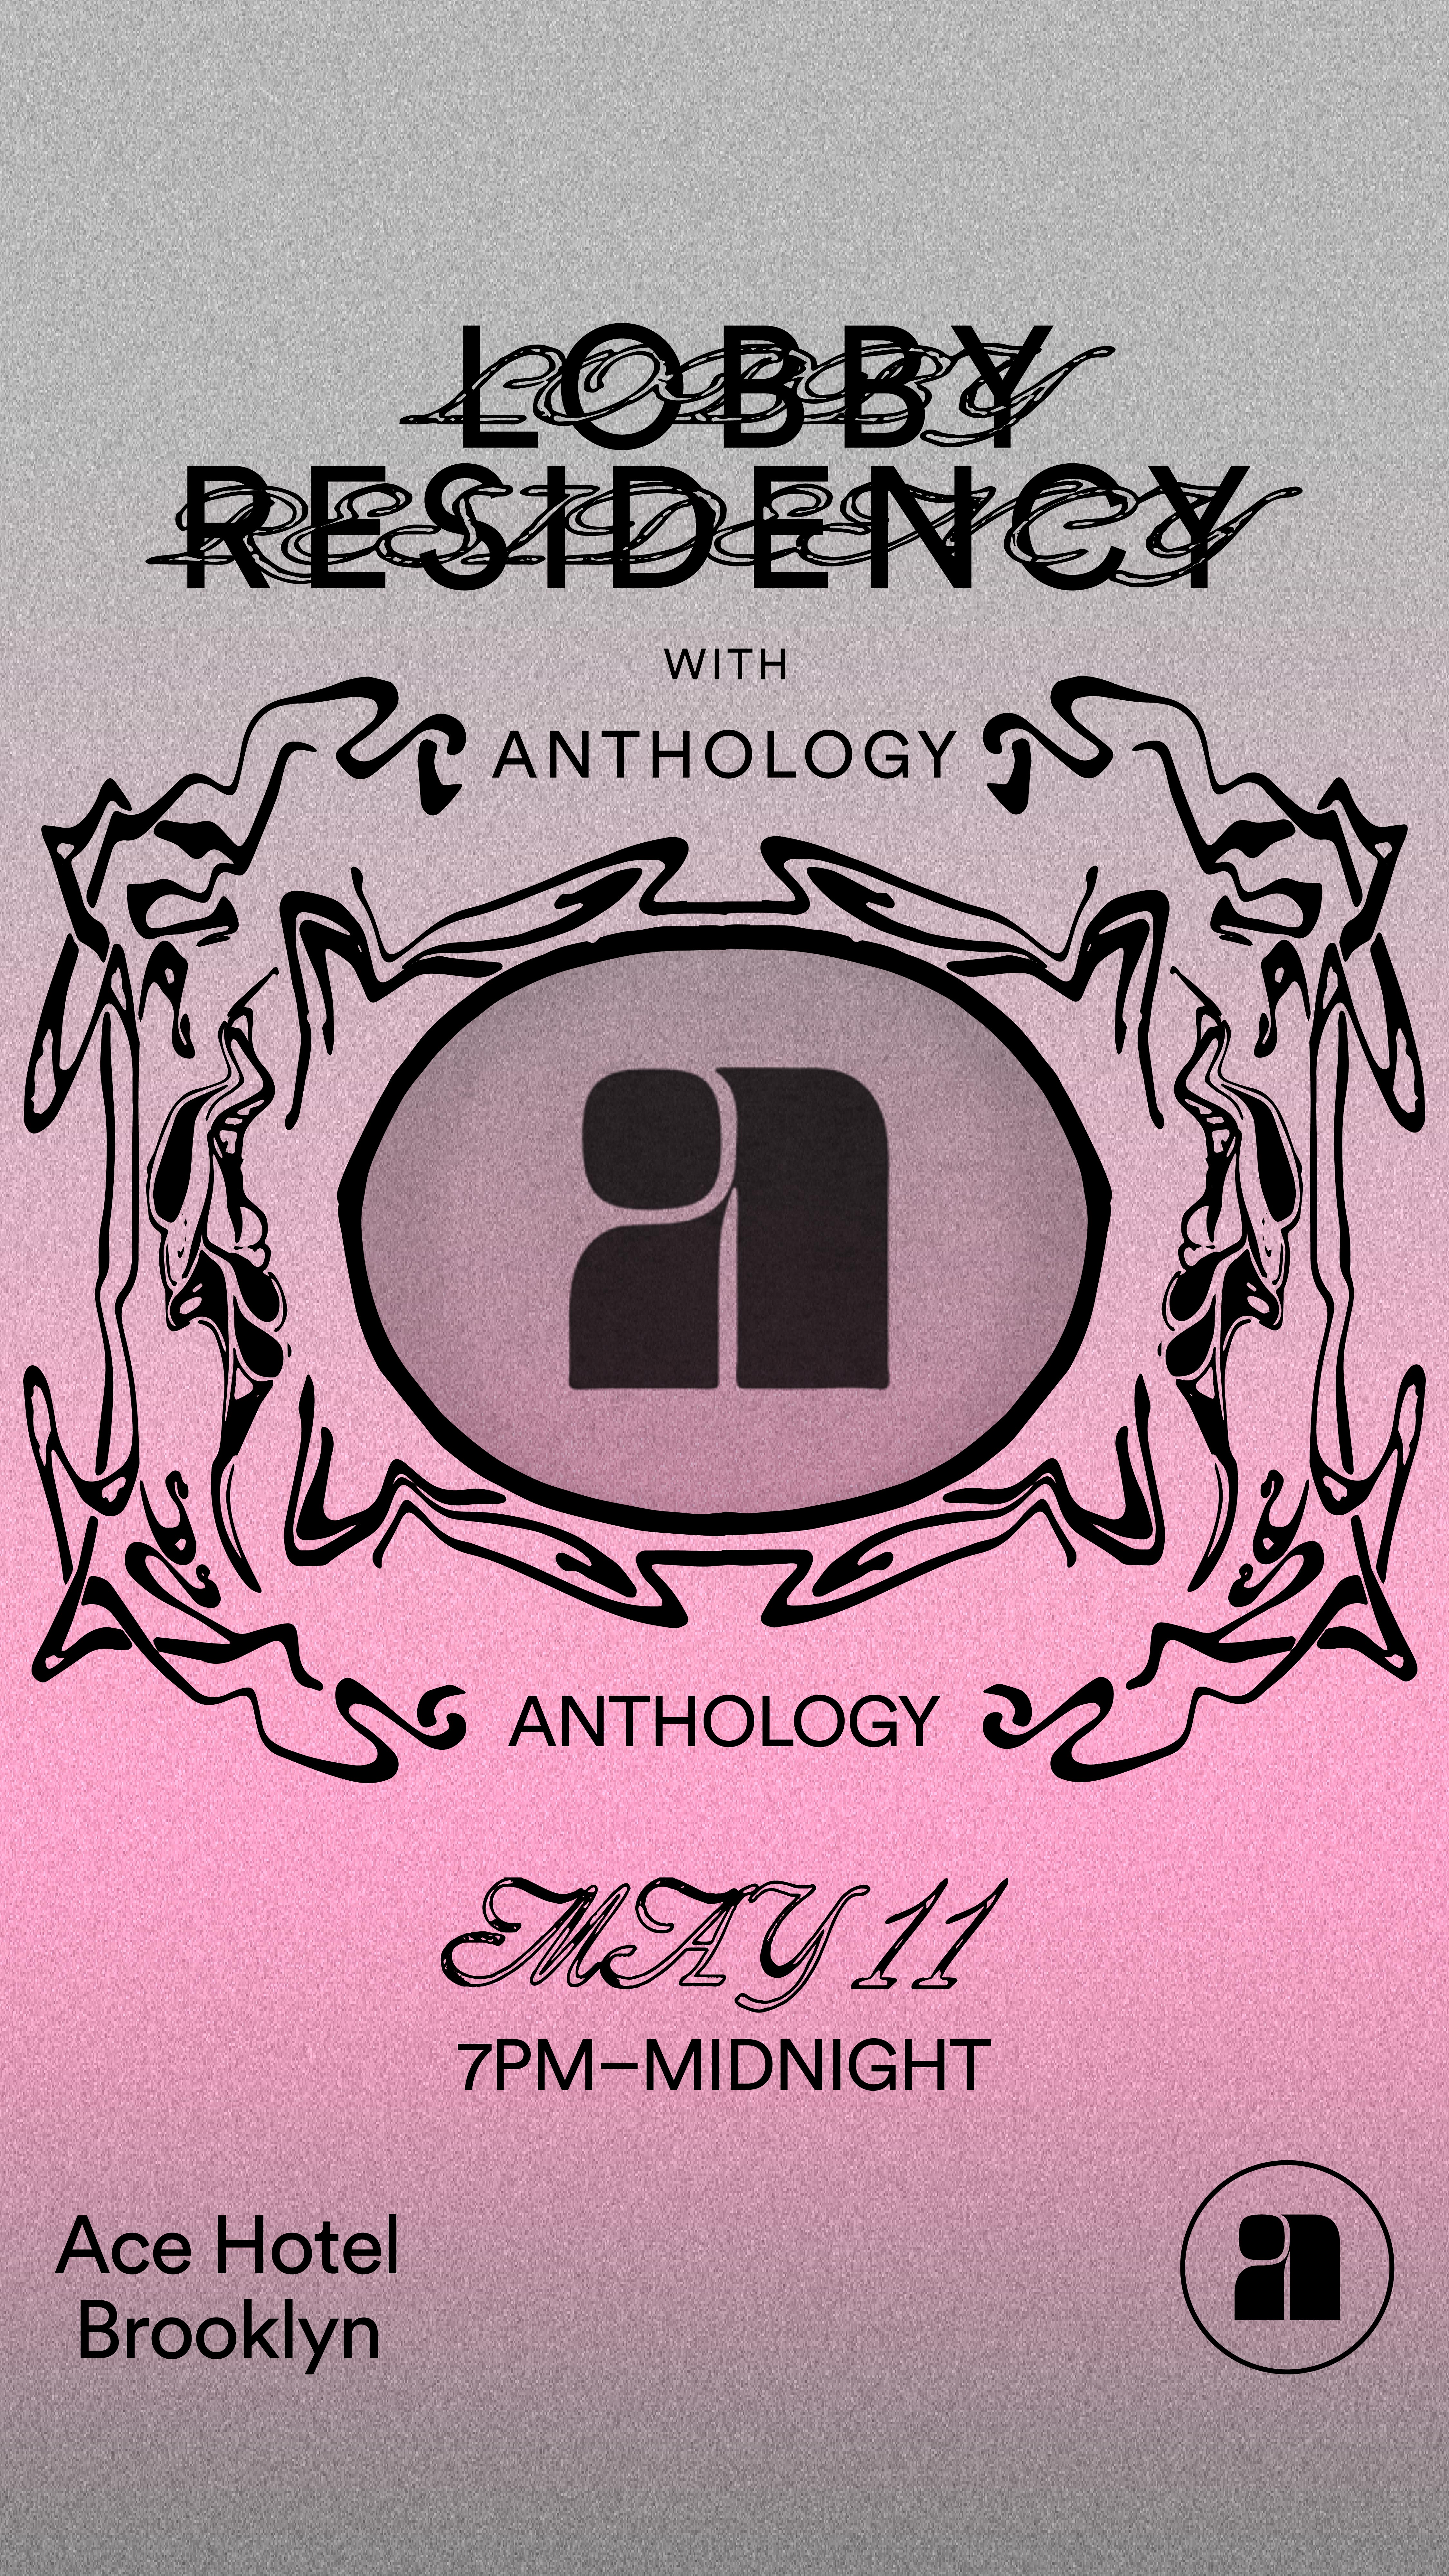 promo flyer anthology music DJ set